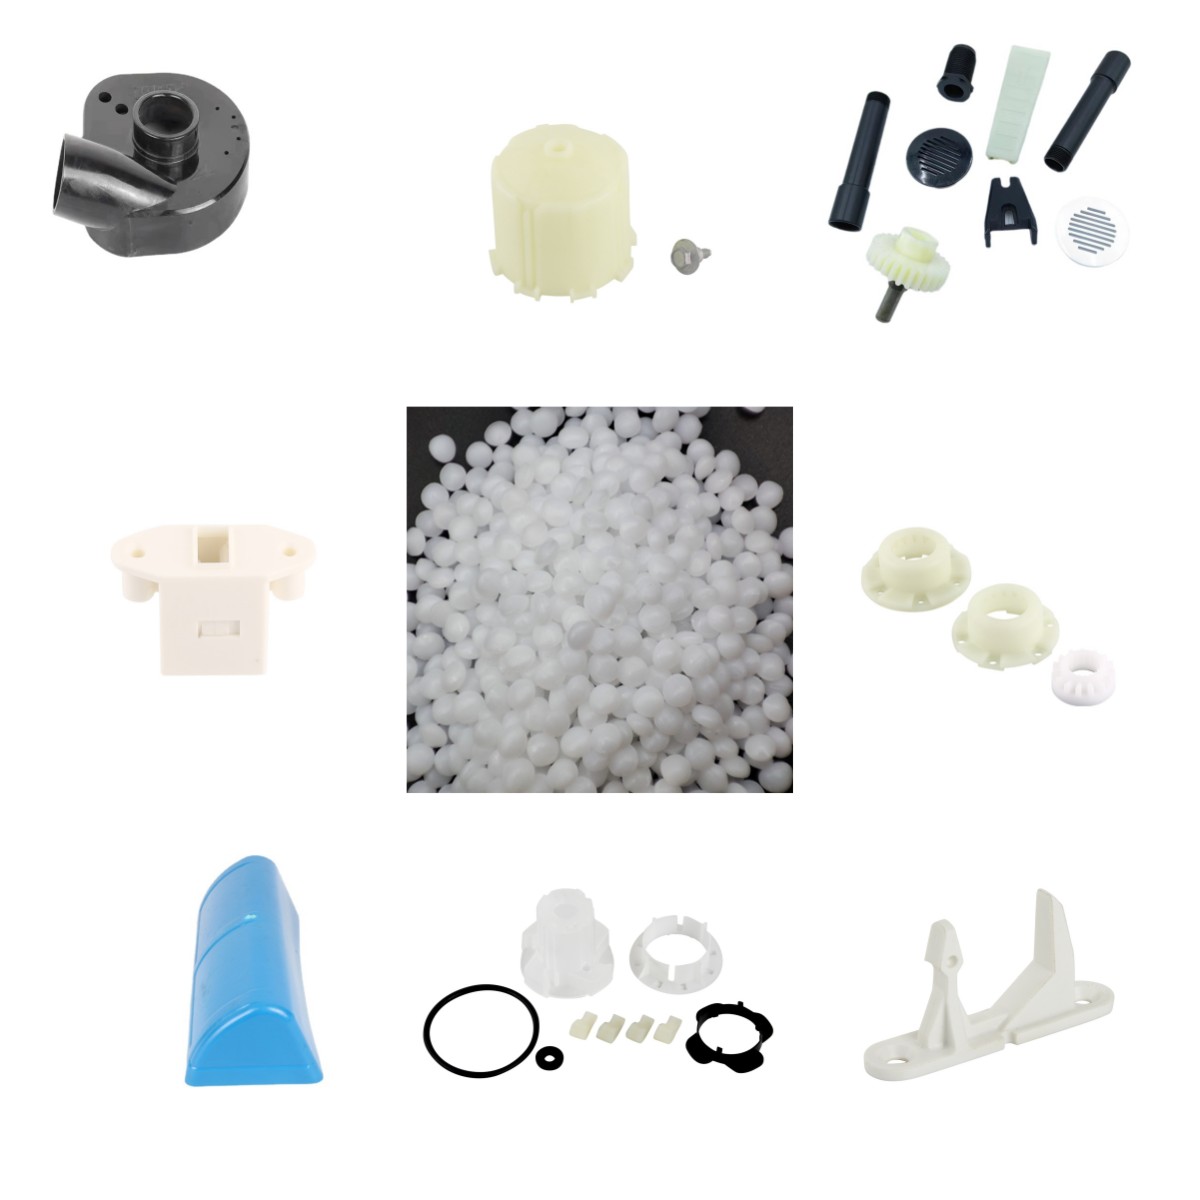 POM Plastic White Origin Raw Material POM with Acetal Polyacetal Polyformaldehyde